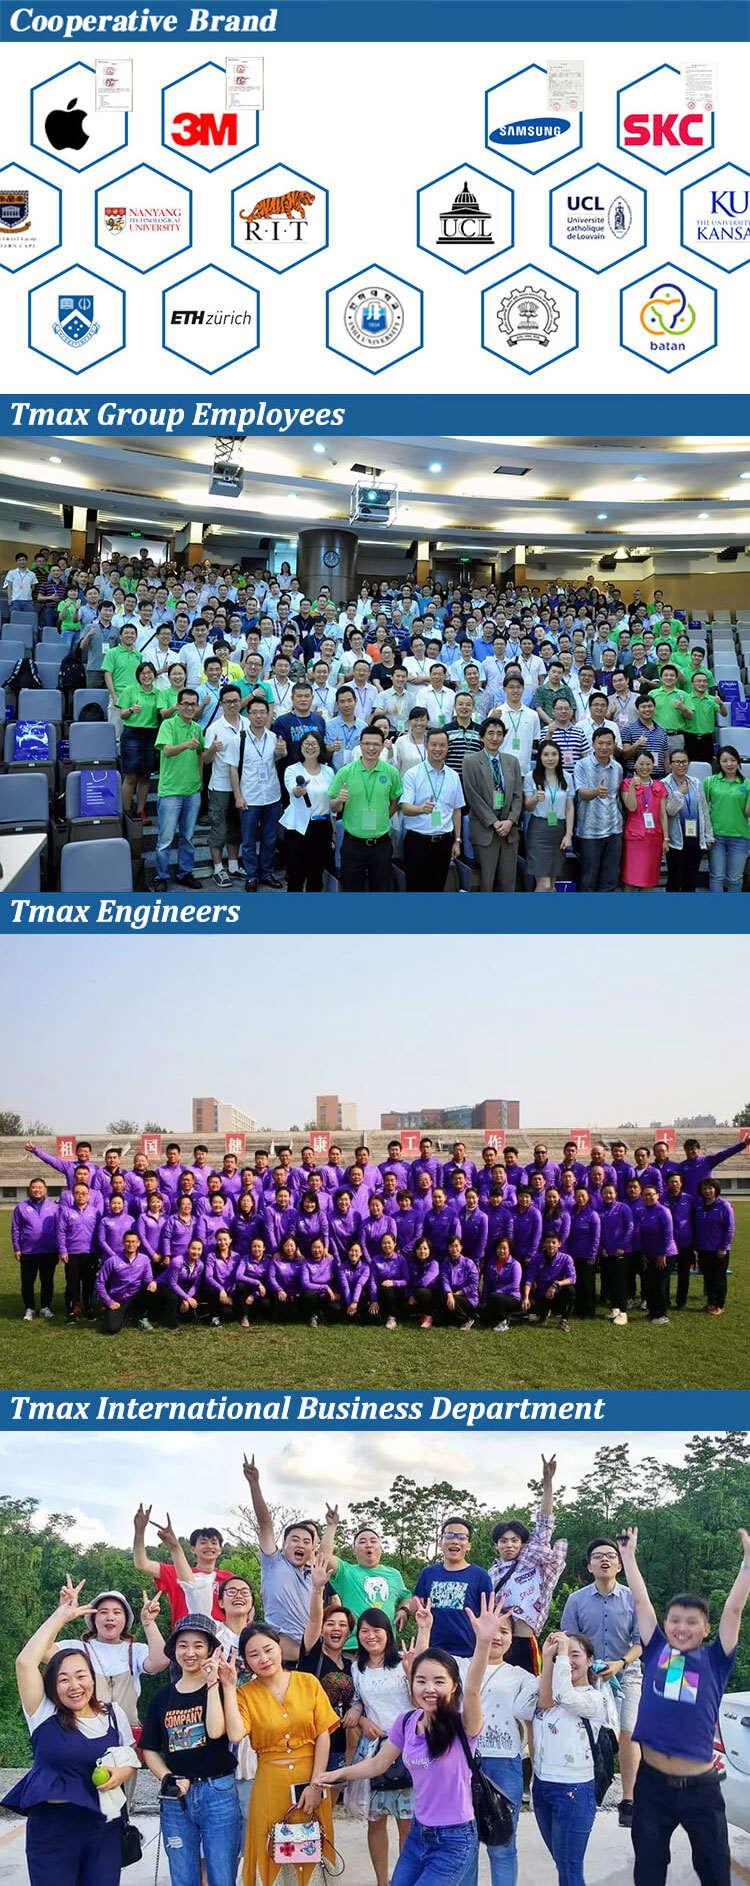 TMAXCN Cooperative Brand and TMAXCN Group Employees